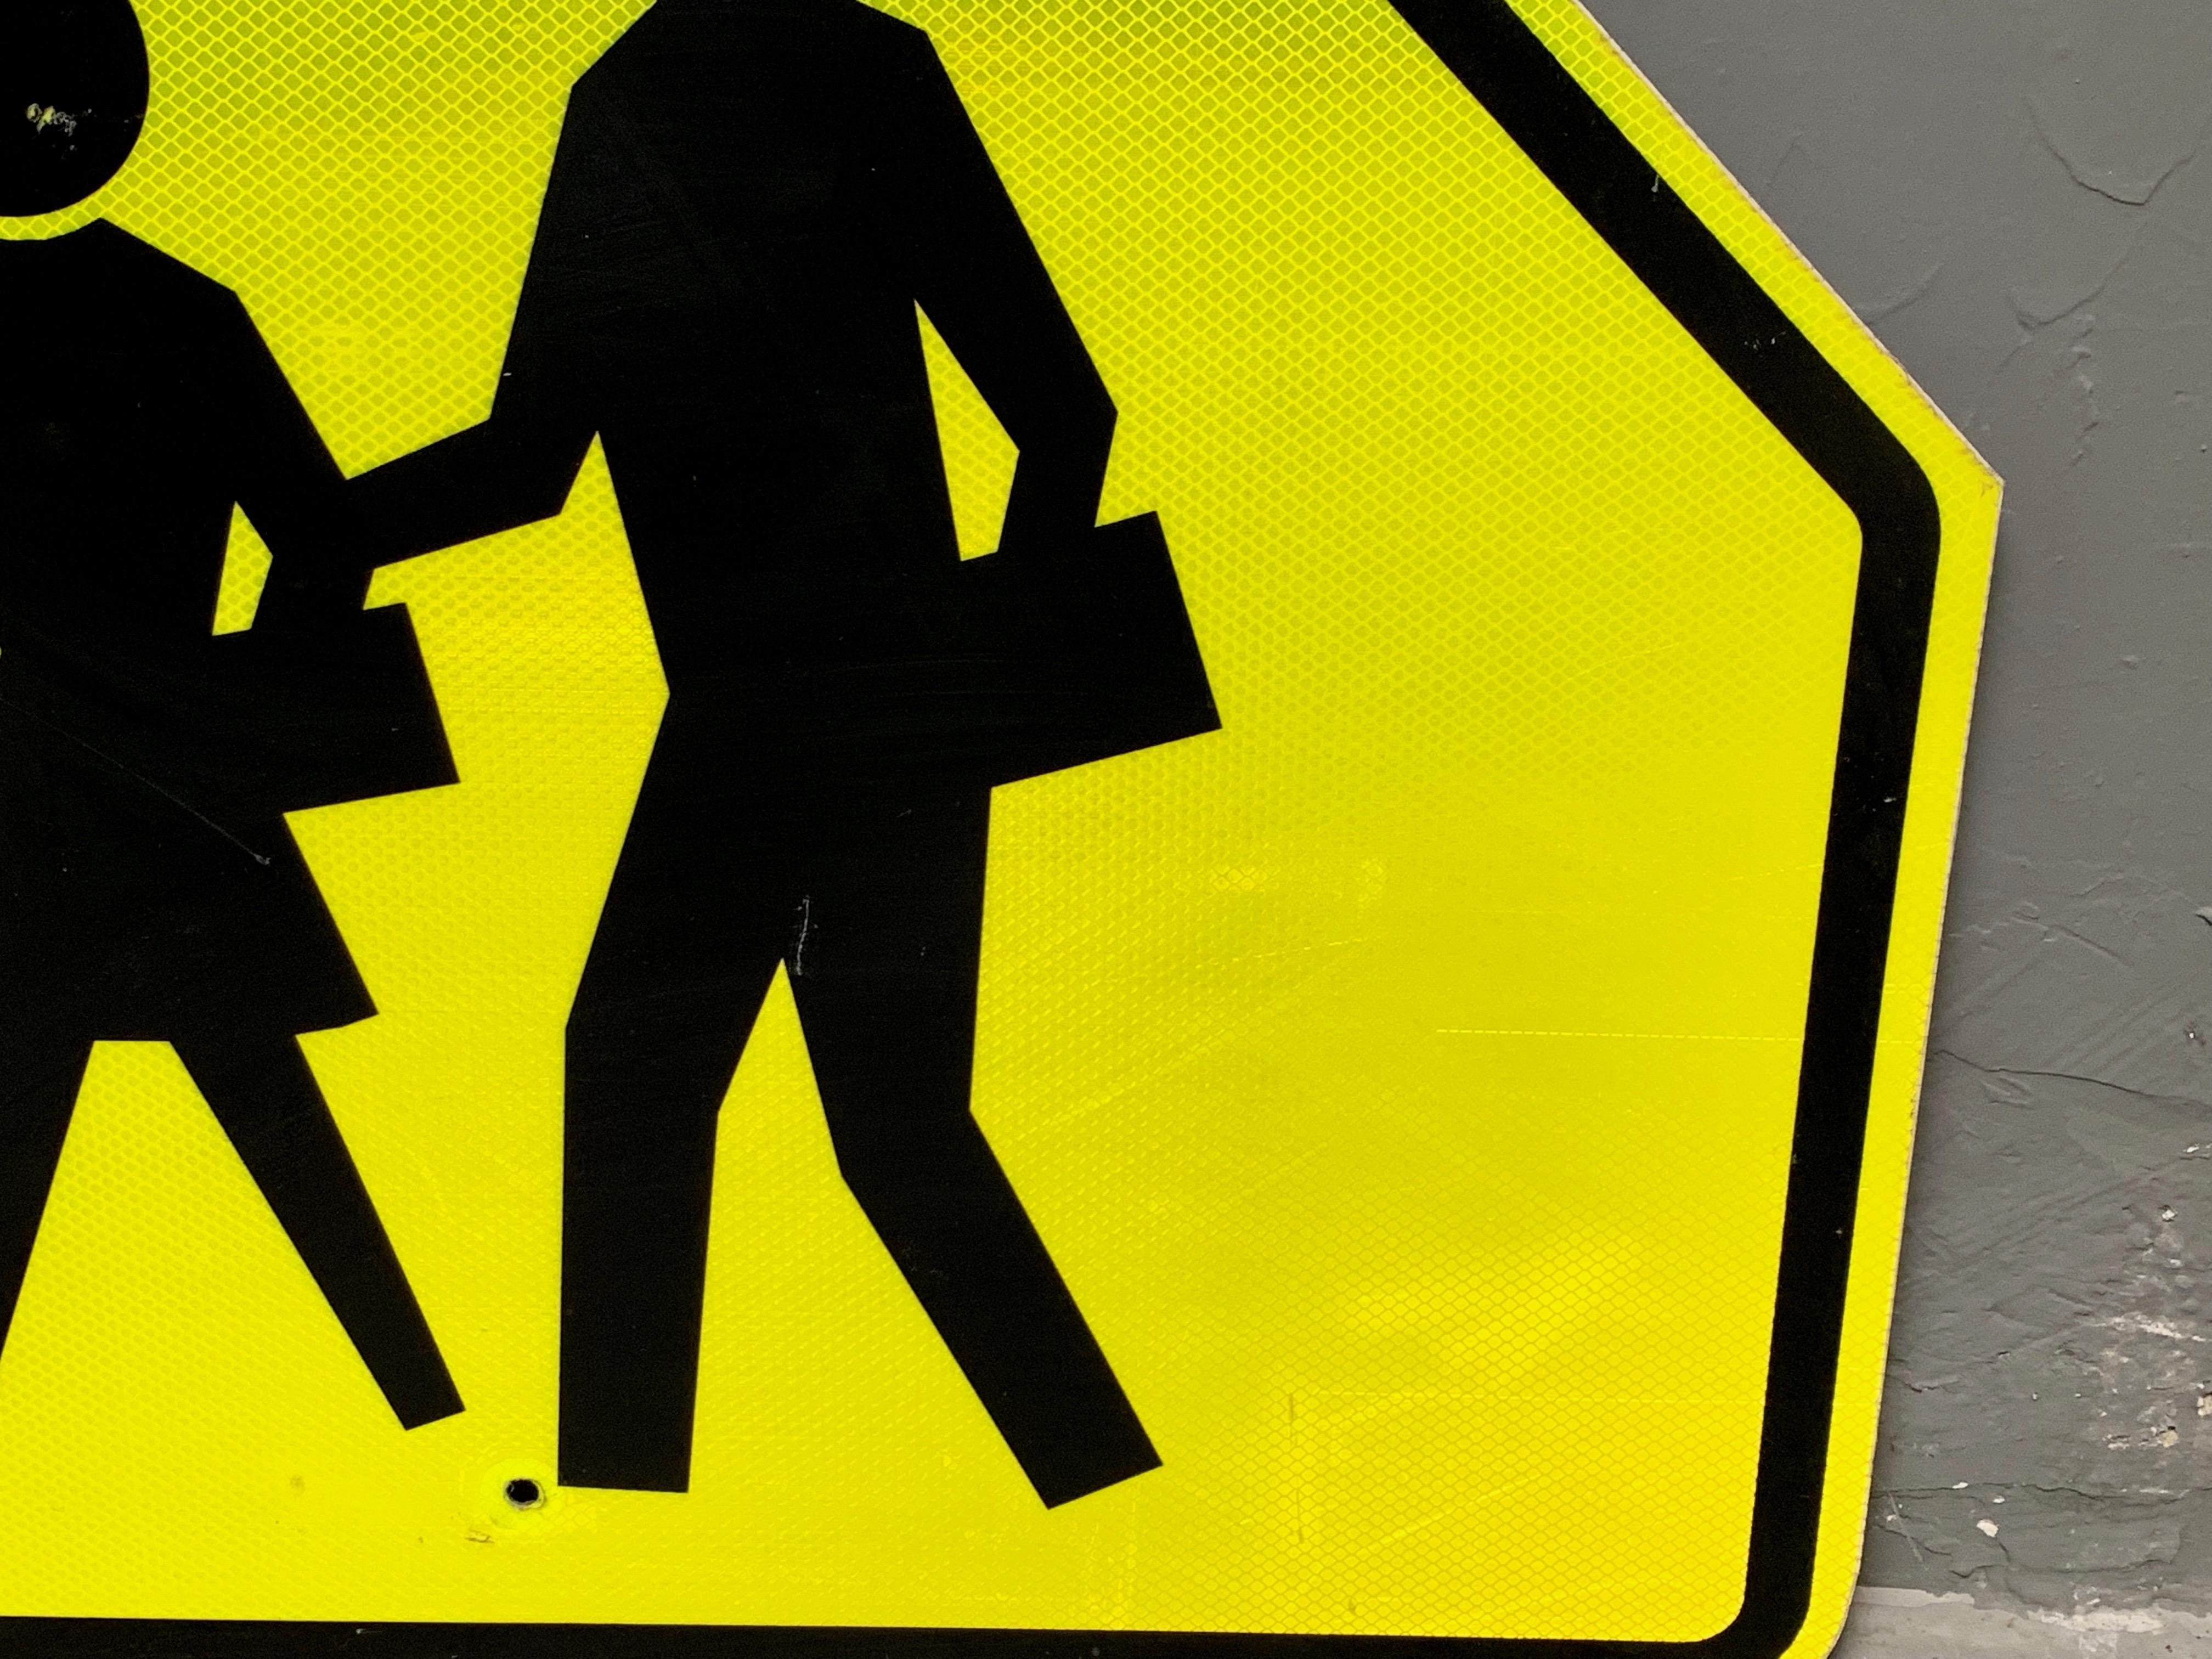 2 people walking sign